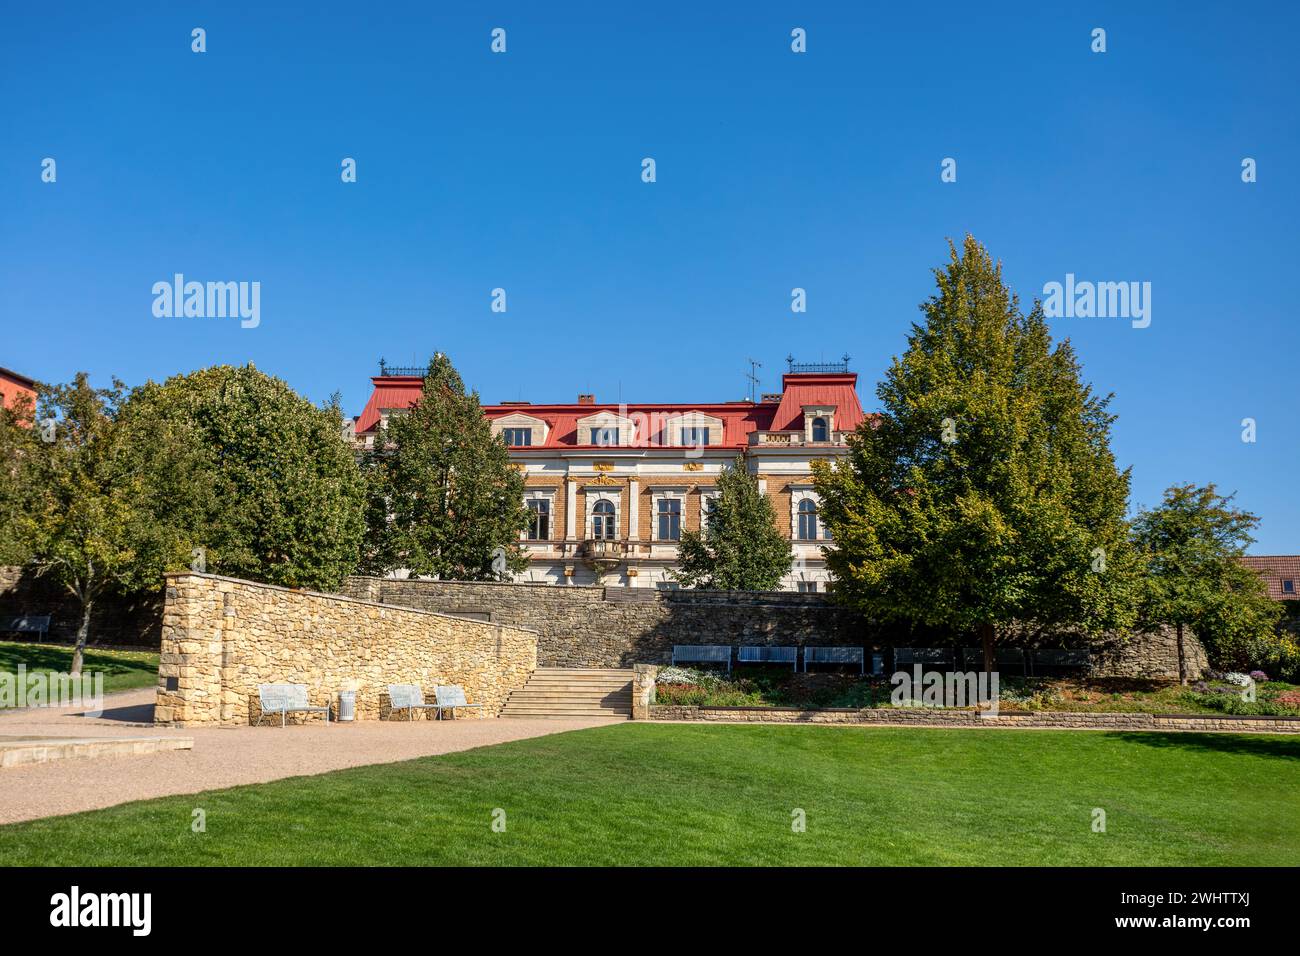 Monastery garden view of Hospital for long term sickness. Litomysl, Czech Republic Stock Photo